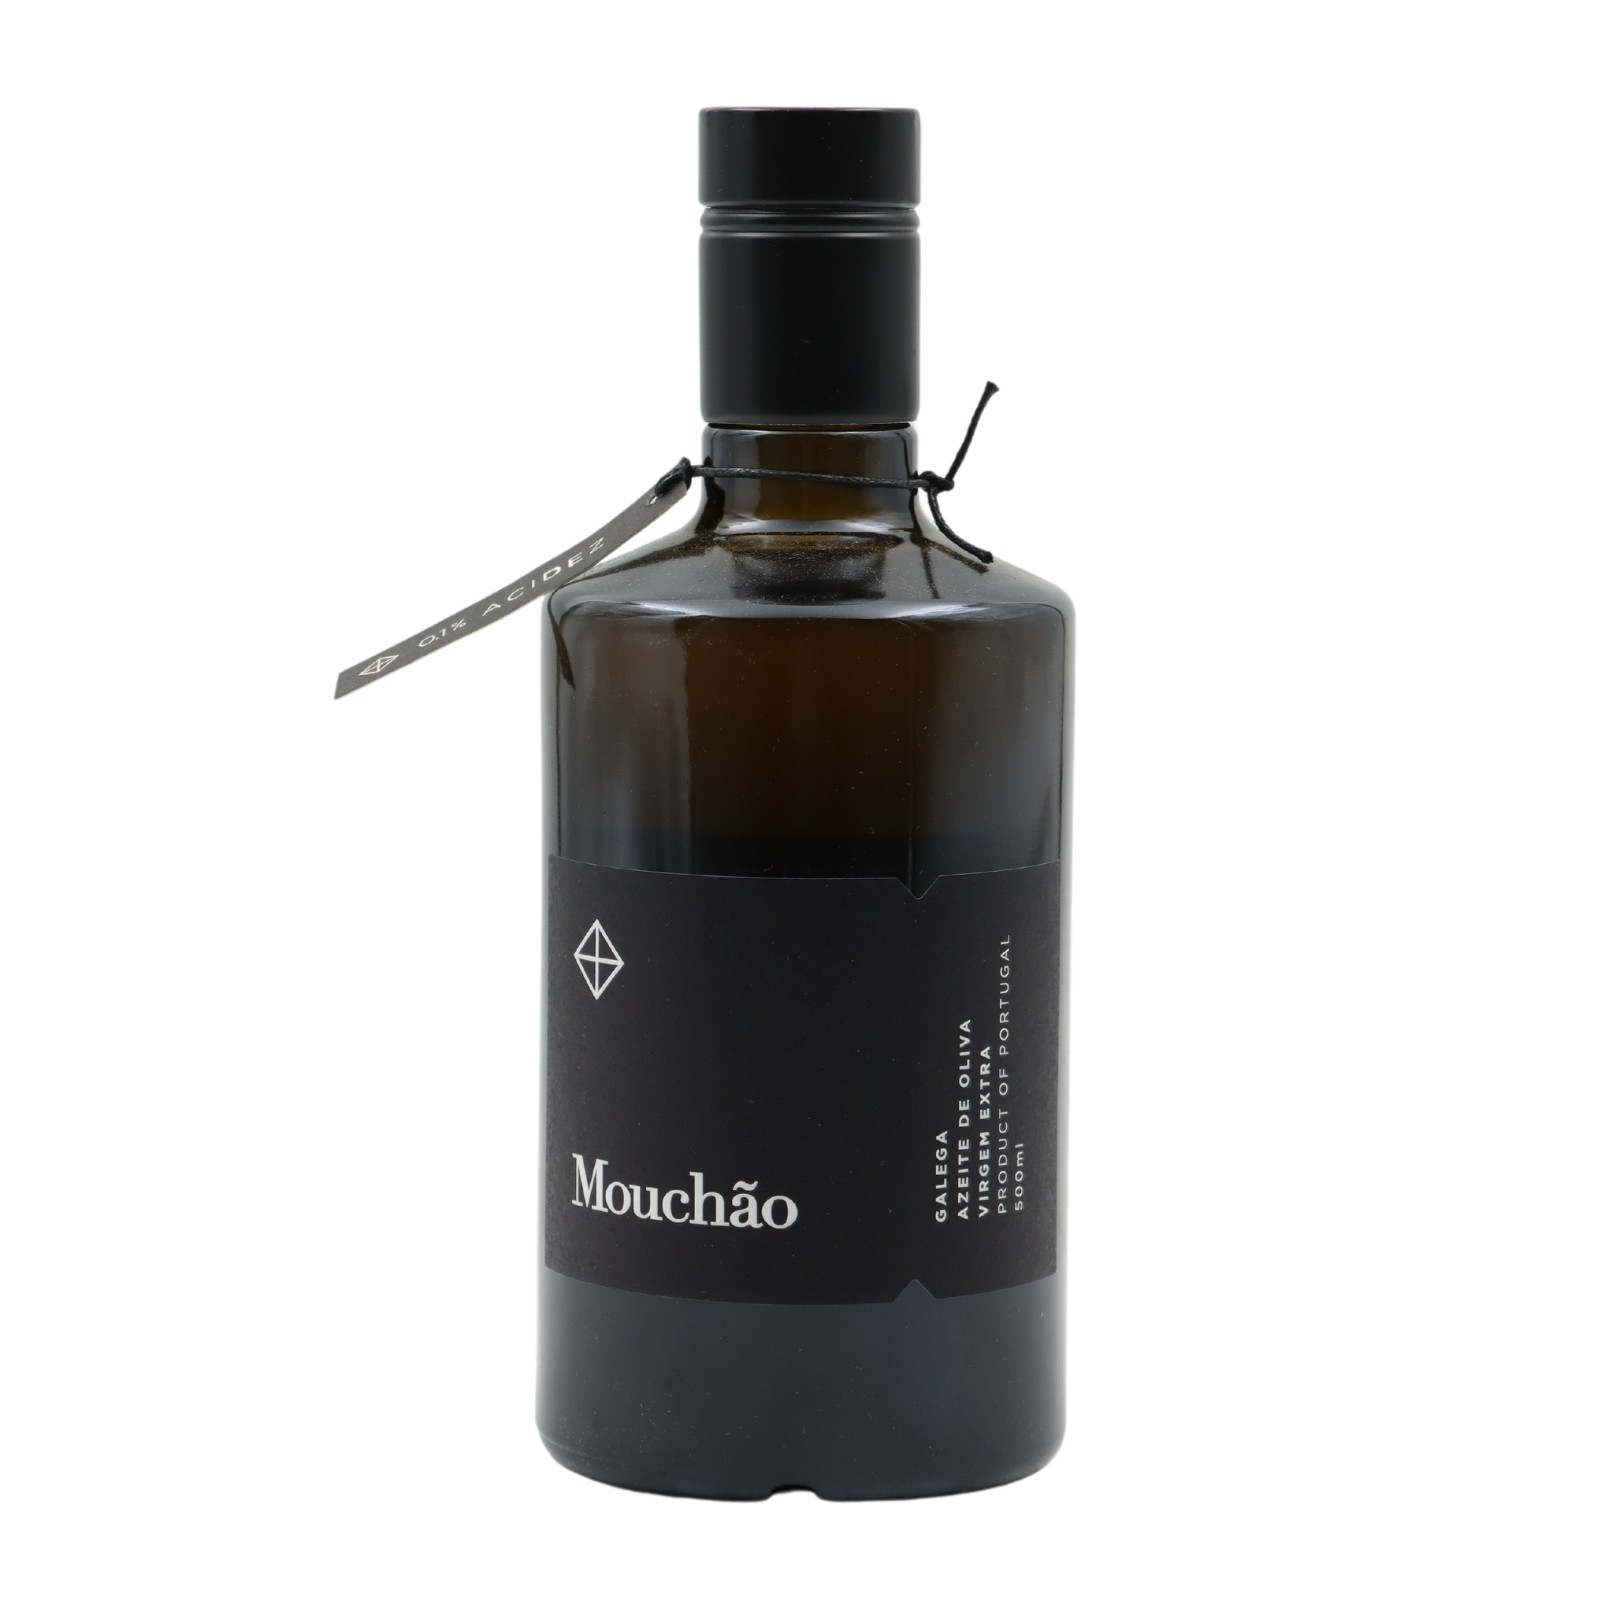 Monte do Mouchão Galega Extra Virgin Olive Oil